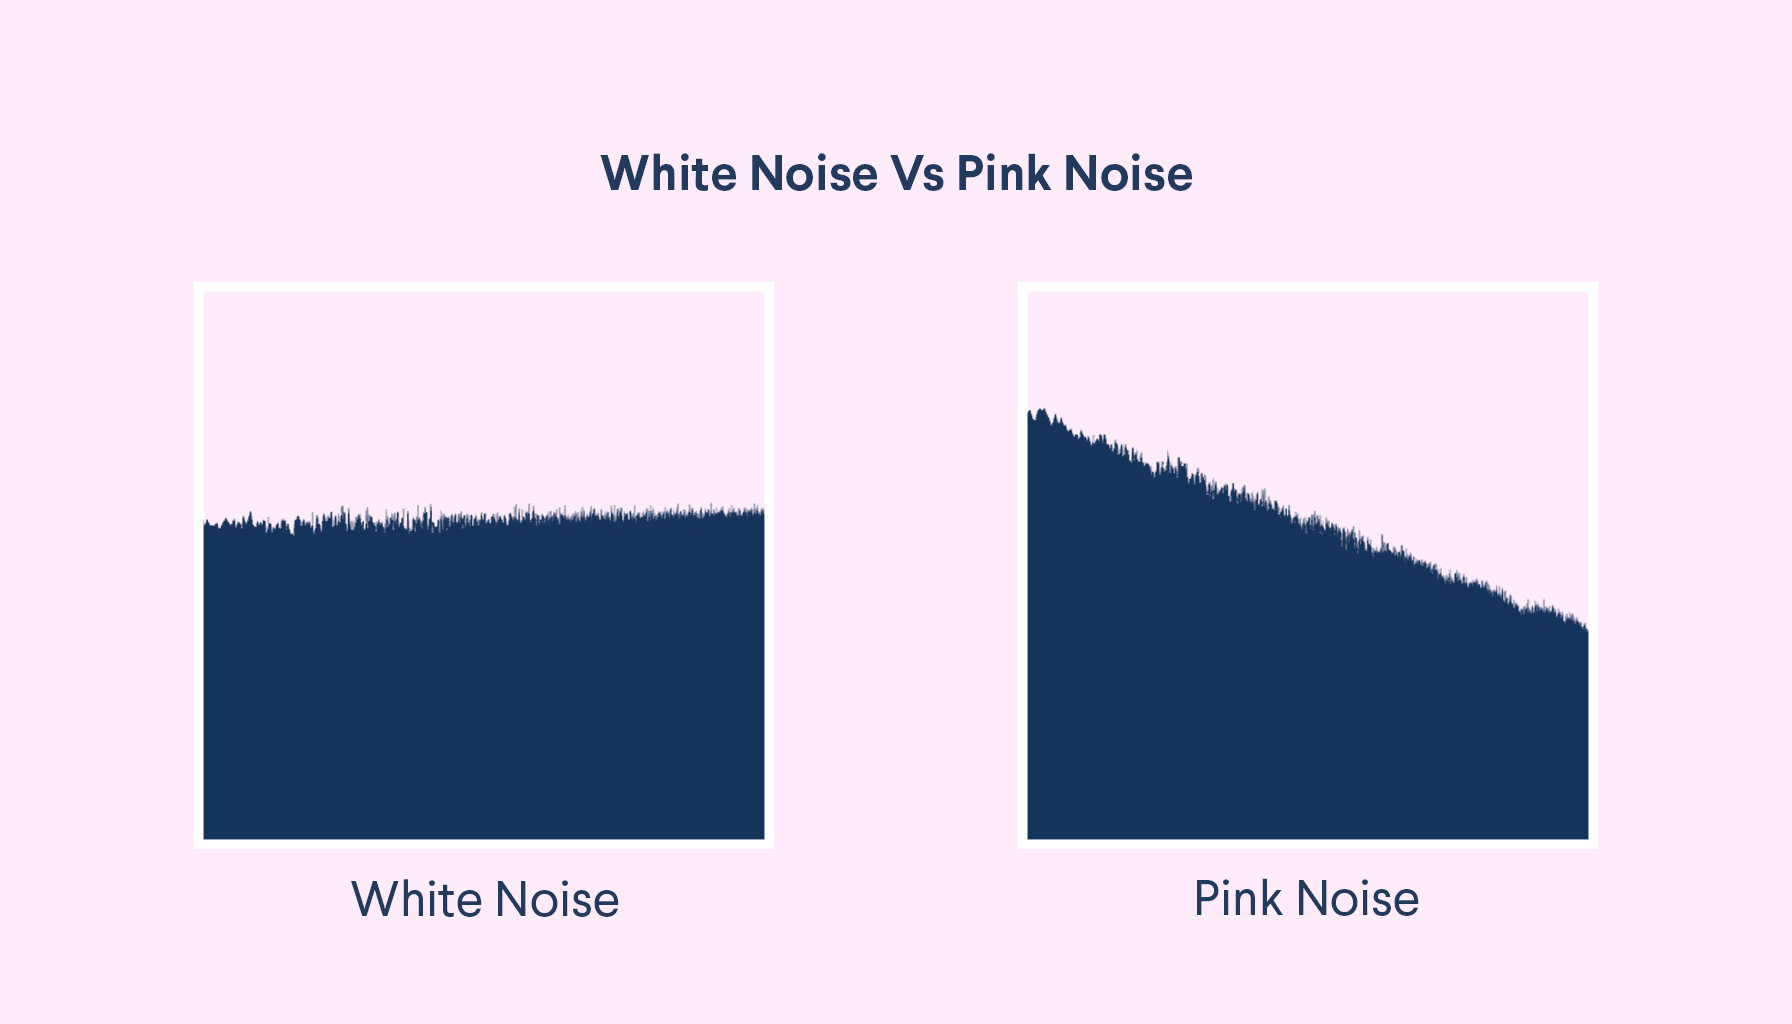 White Noise vs Pink Noise